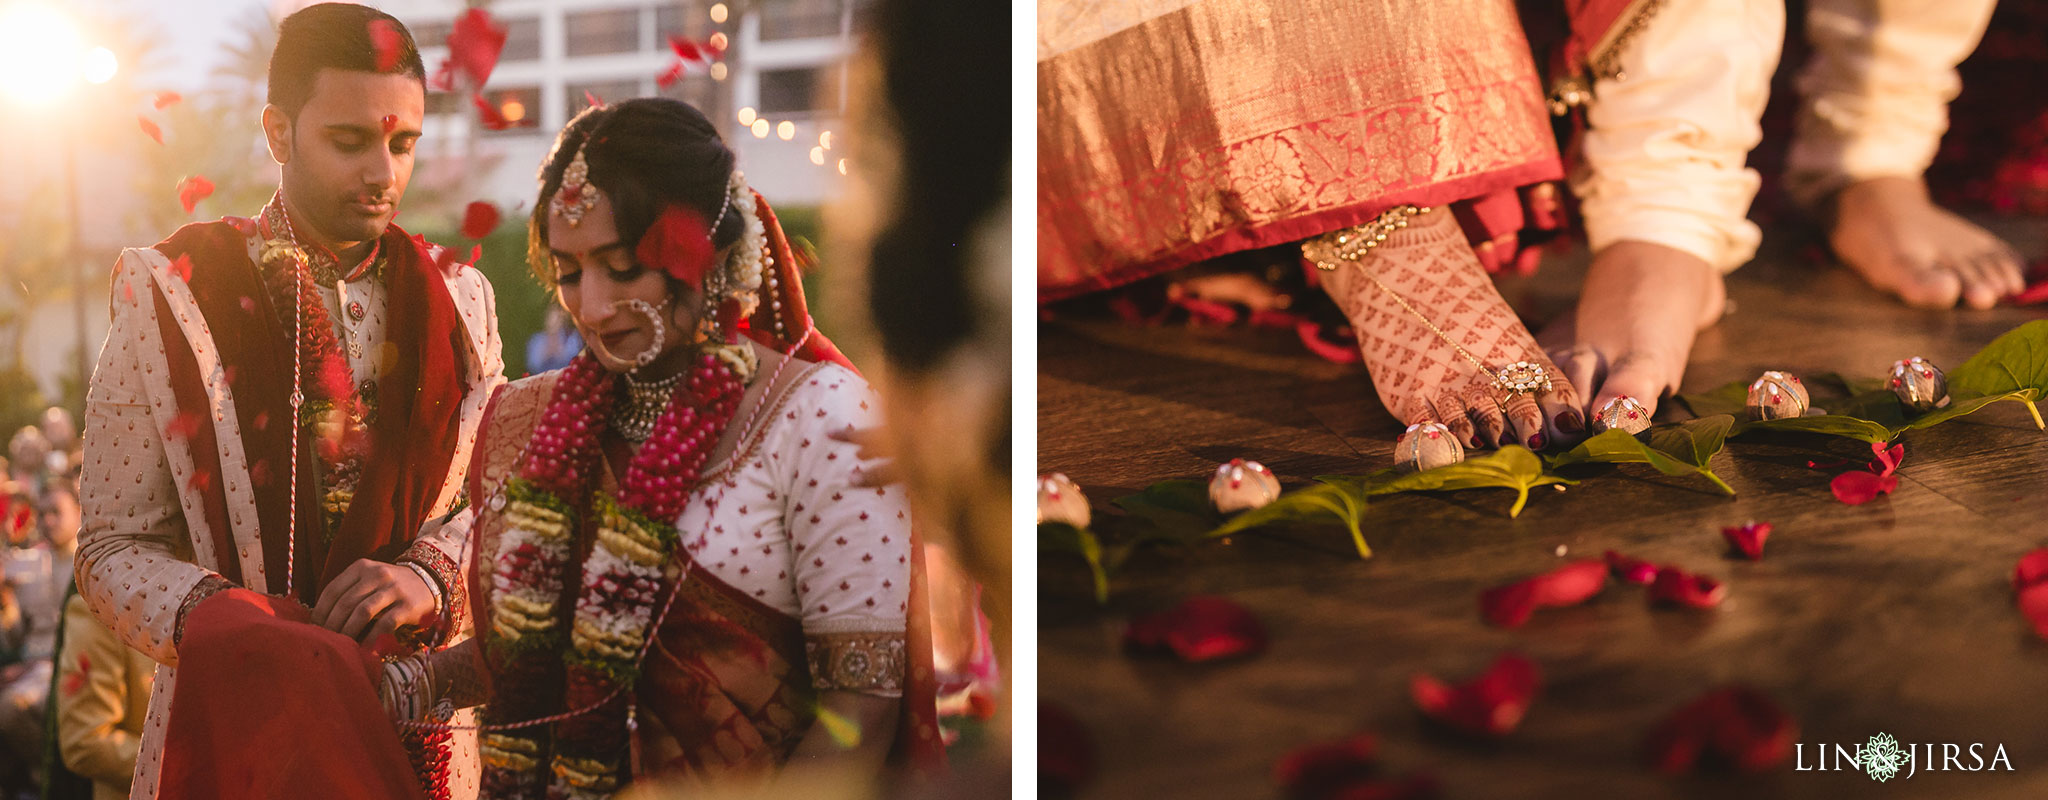 40 hotel irvine indian wedding ceremony photography